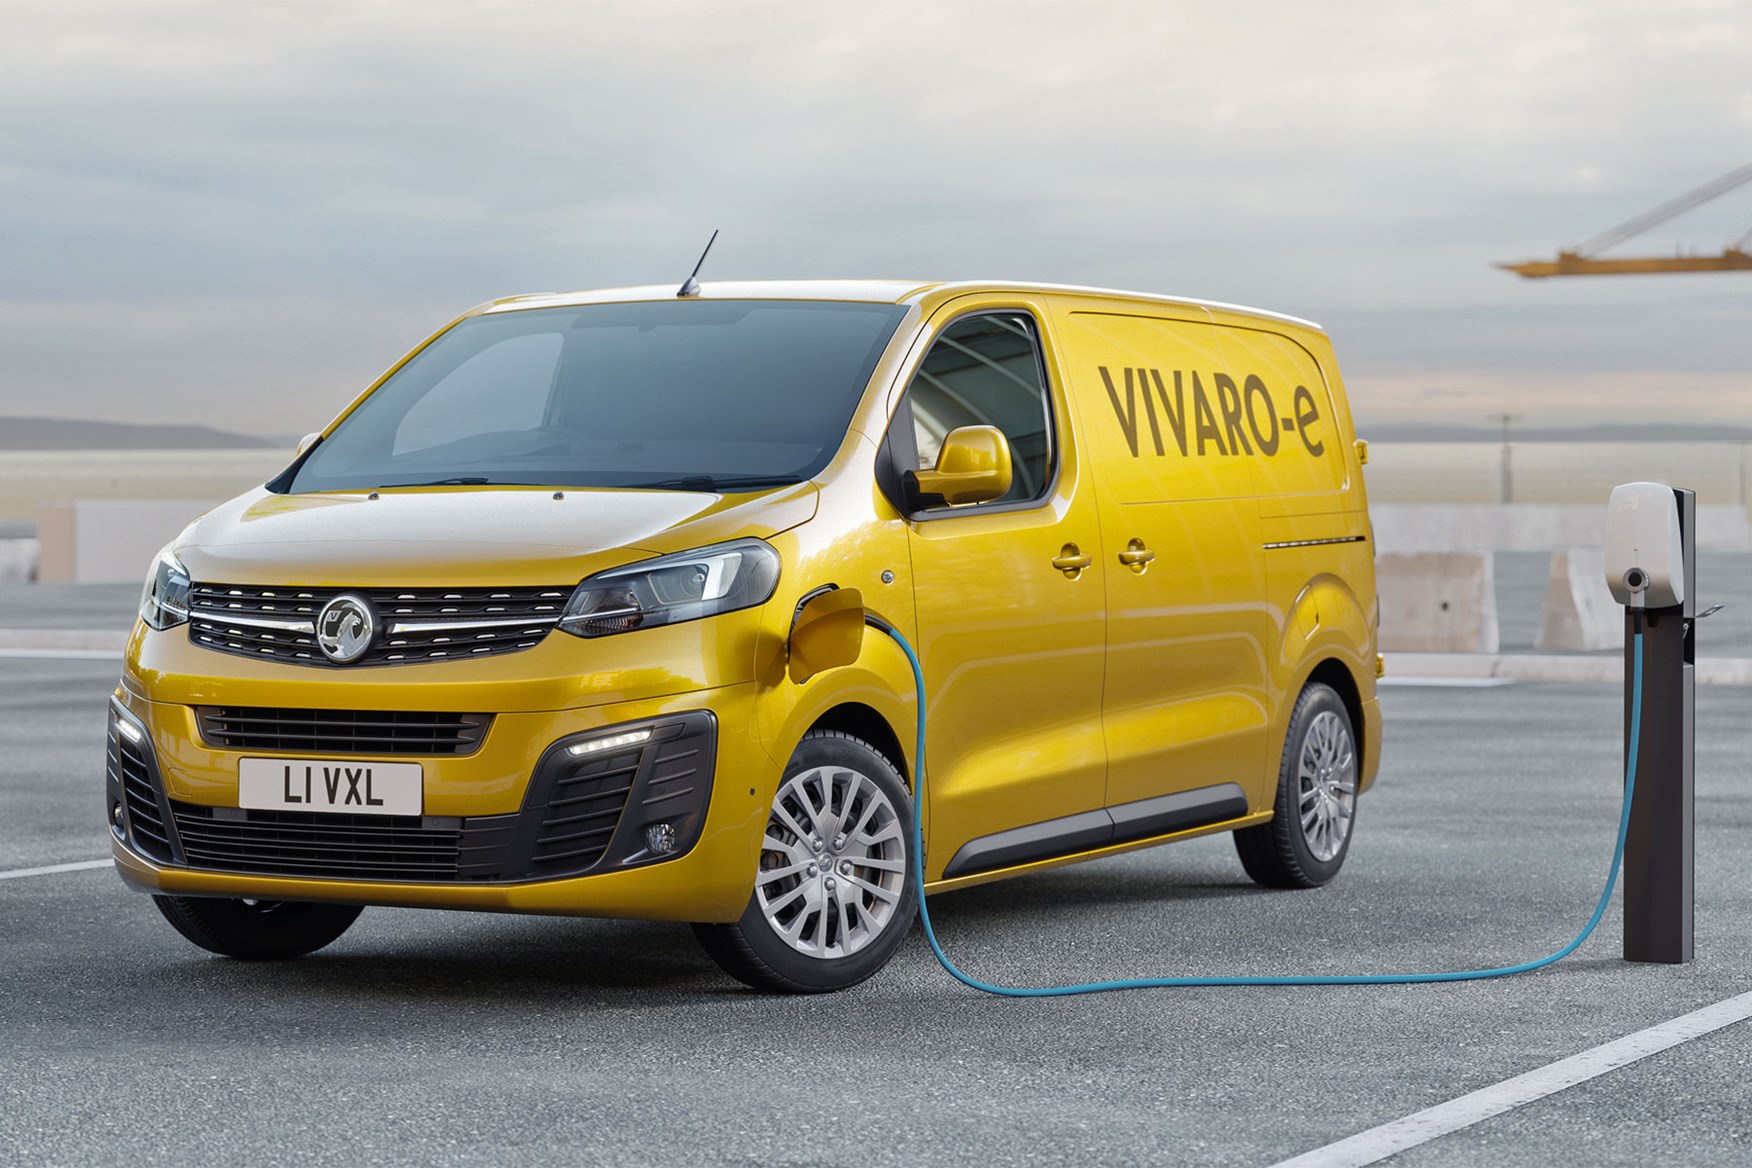 Vauxhall Vivaro-e electric van - charging, yellow, on sale in 2020